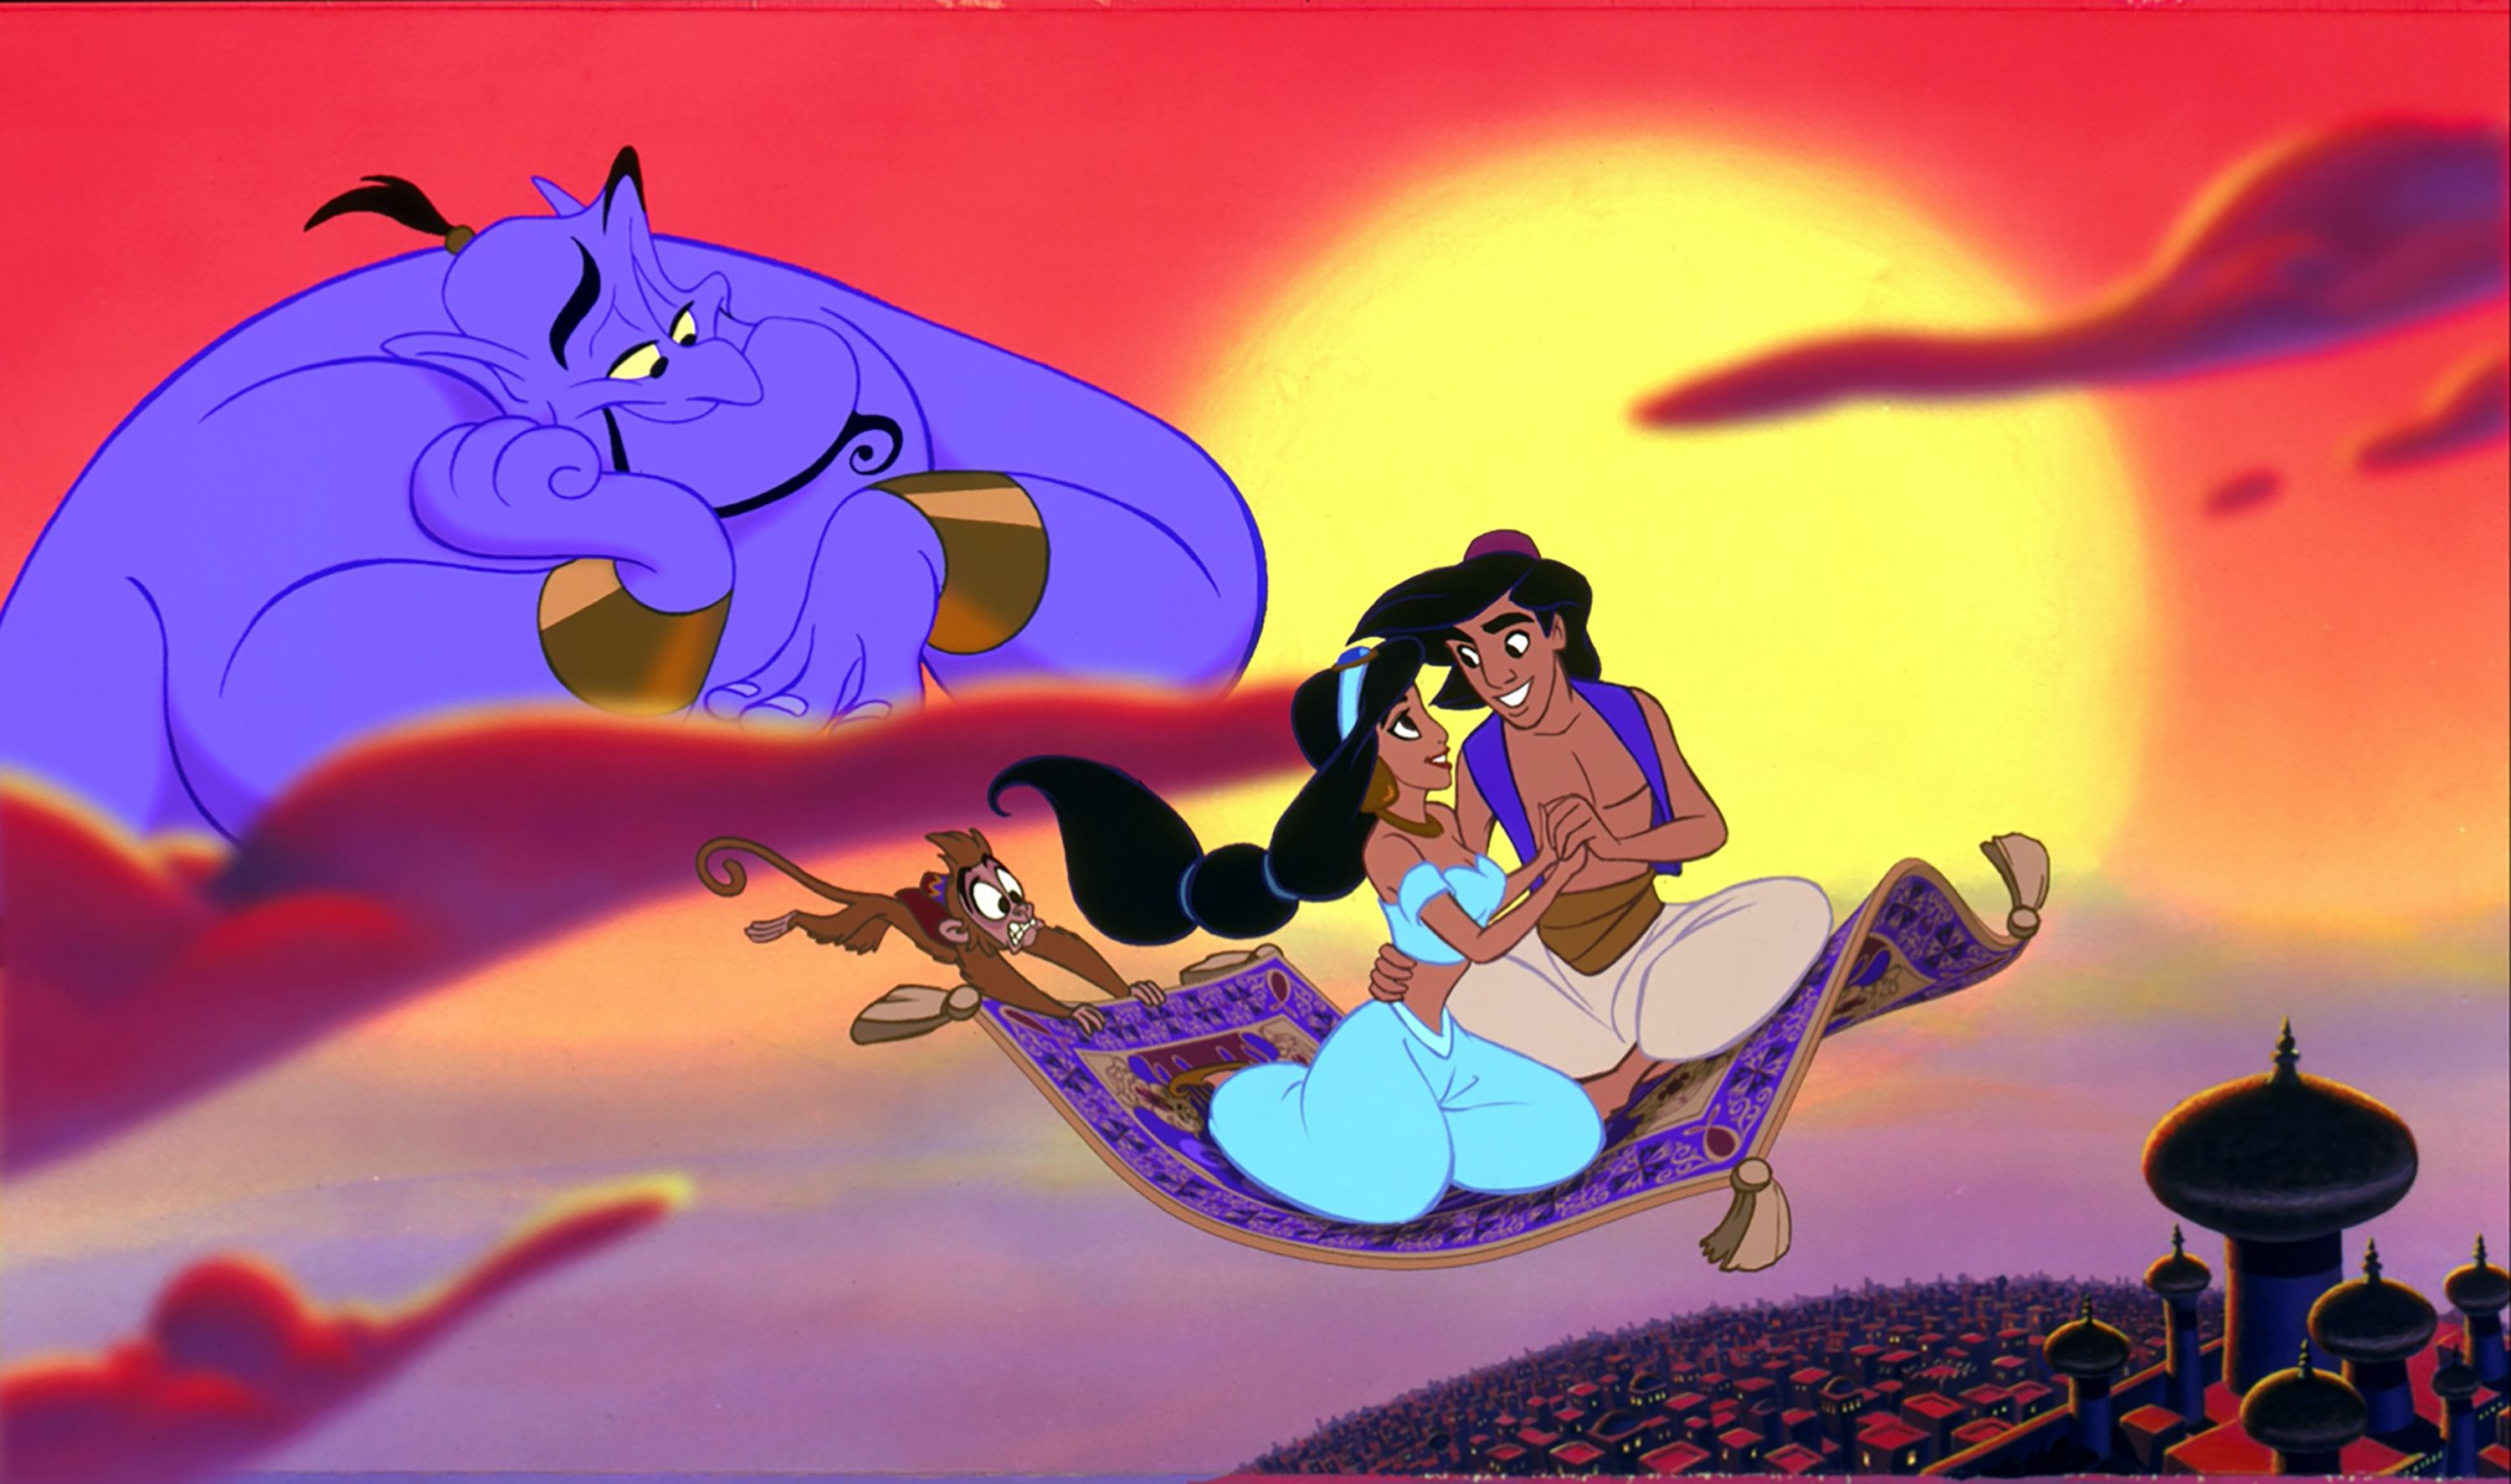 Aladdin' turns 30: Alan Menken on the journey of an animated classic | CNN